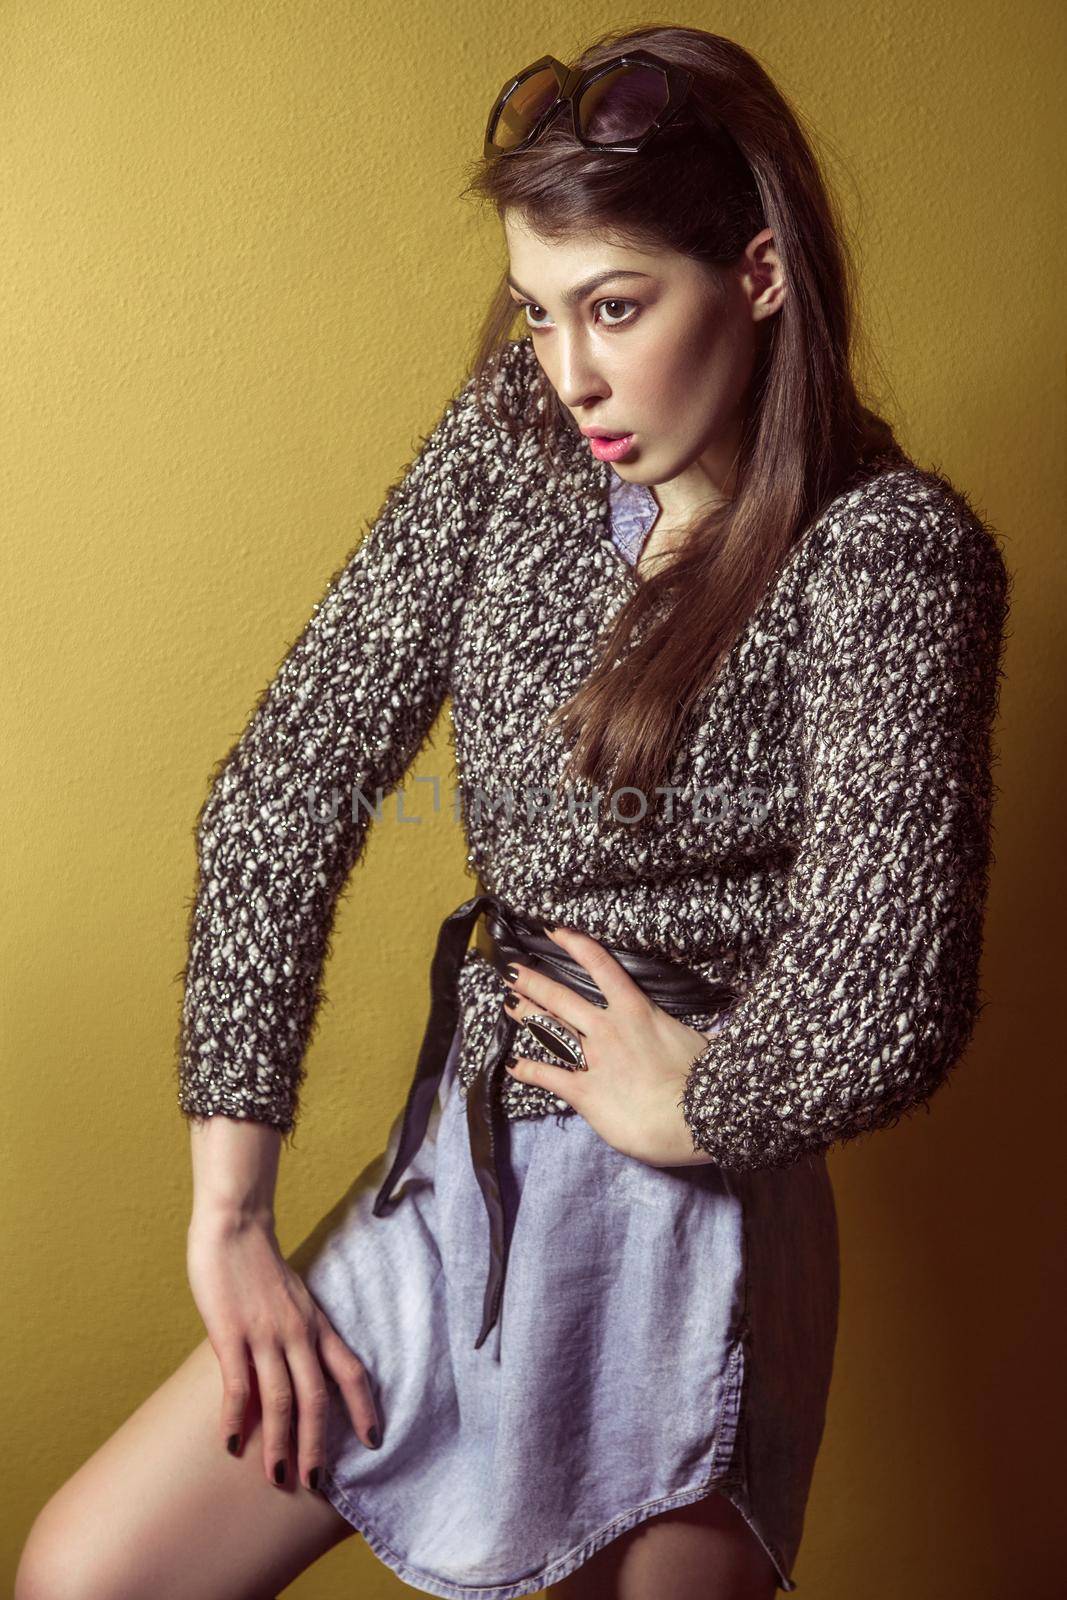 Mixed race sexy fashion model posing on stepladder. by Khosro1